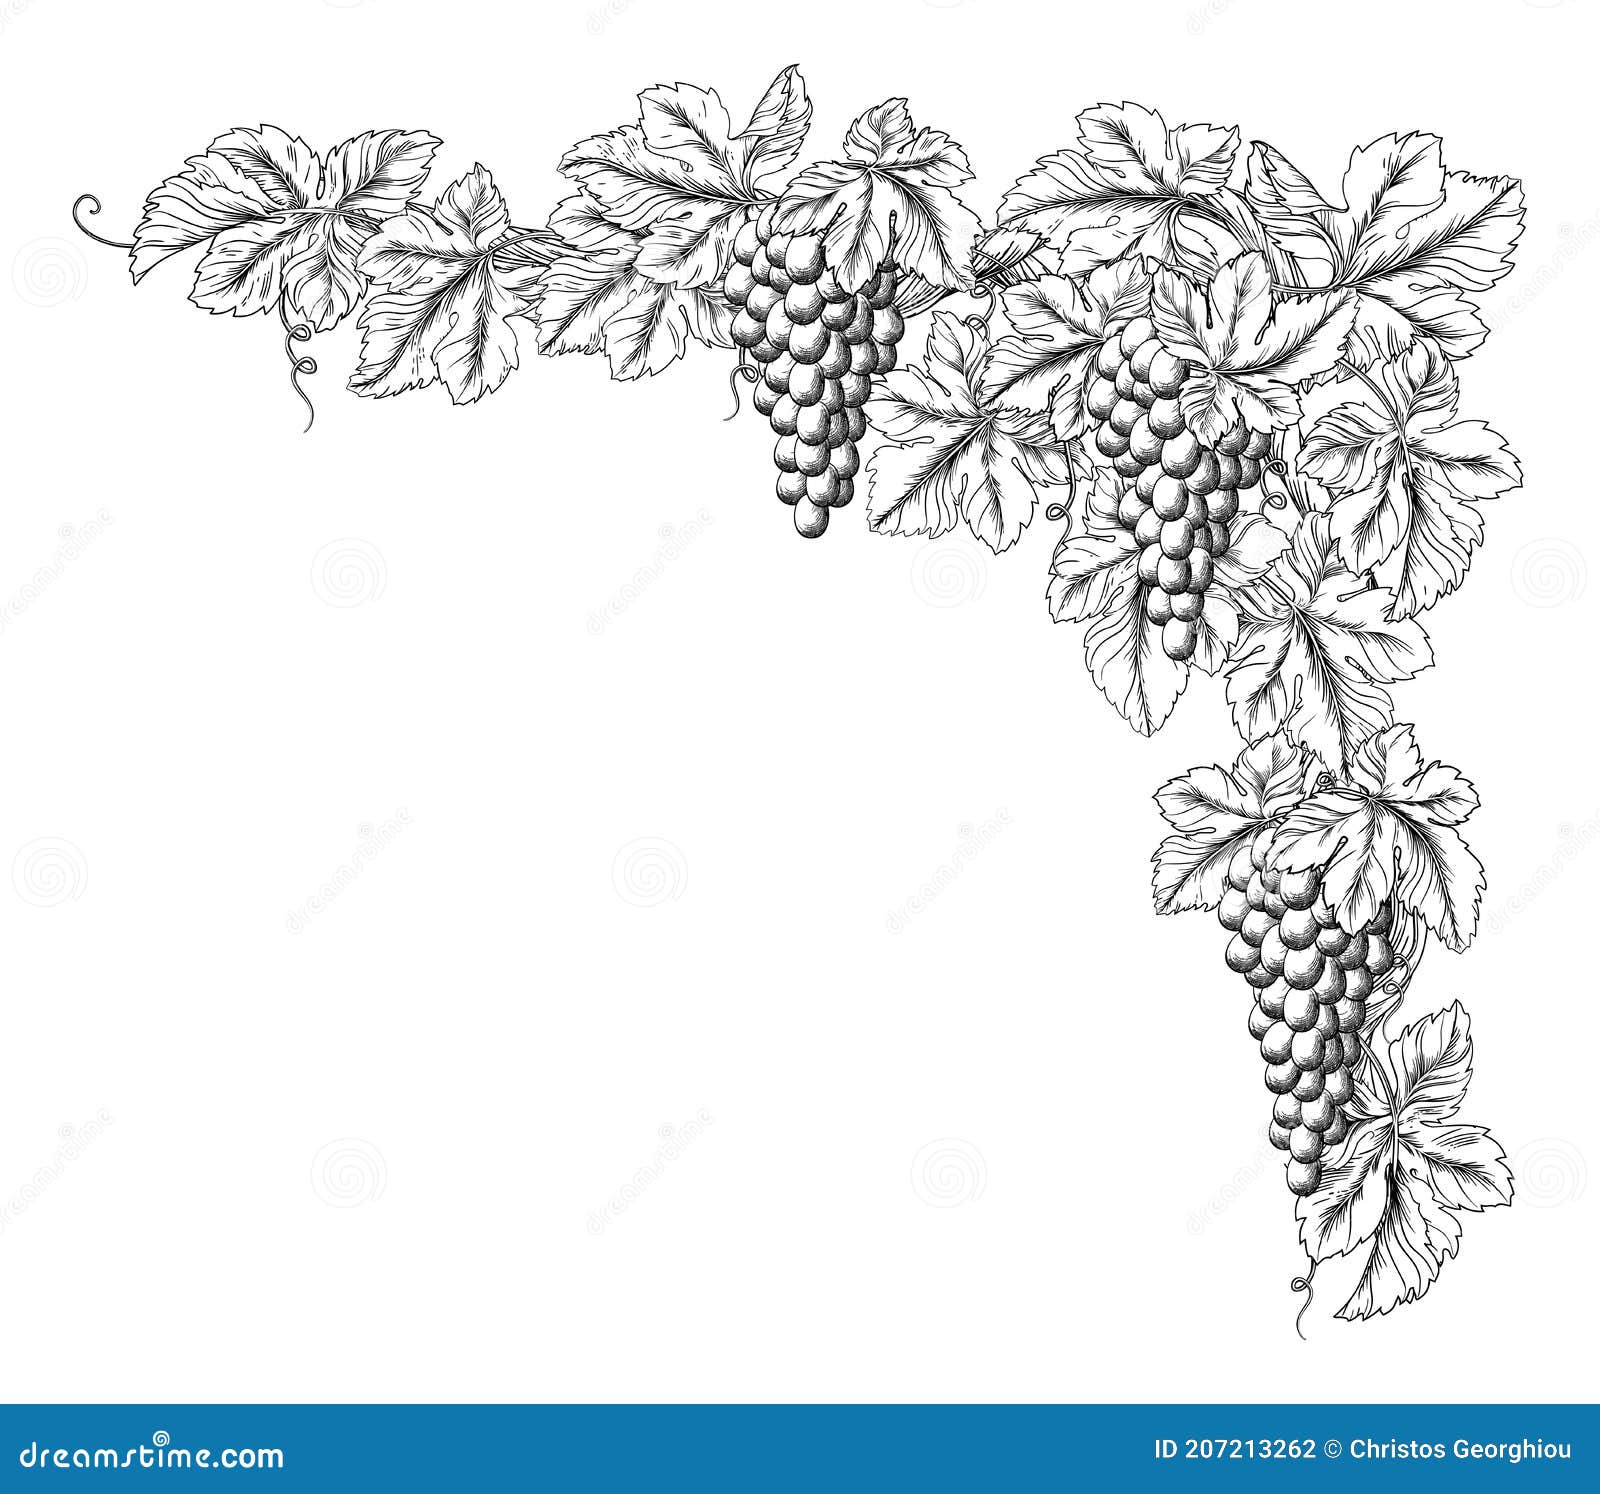 Grape Vine Sketch Vector Images over 3100